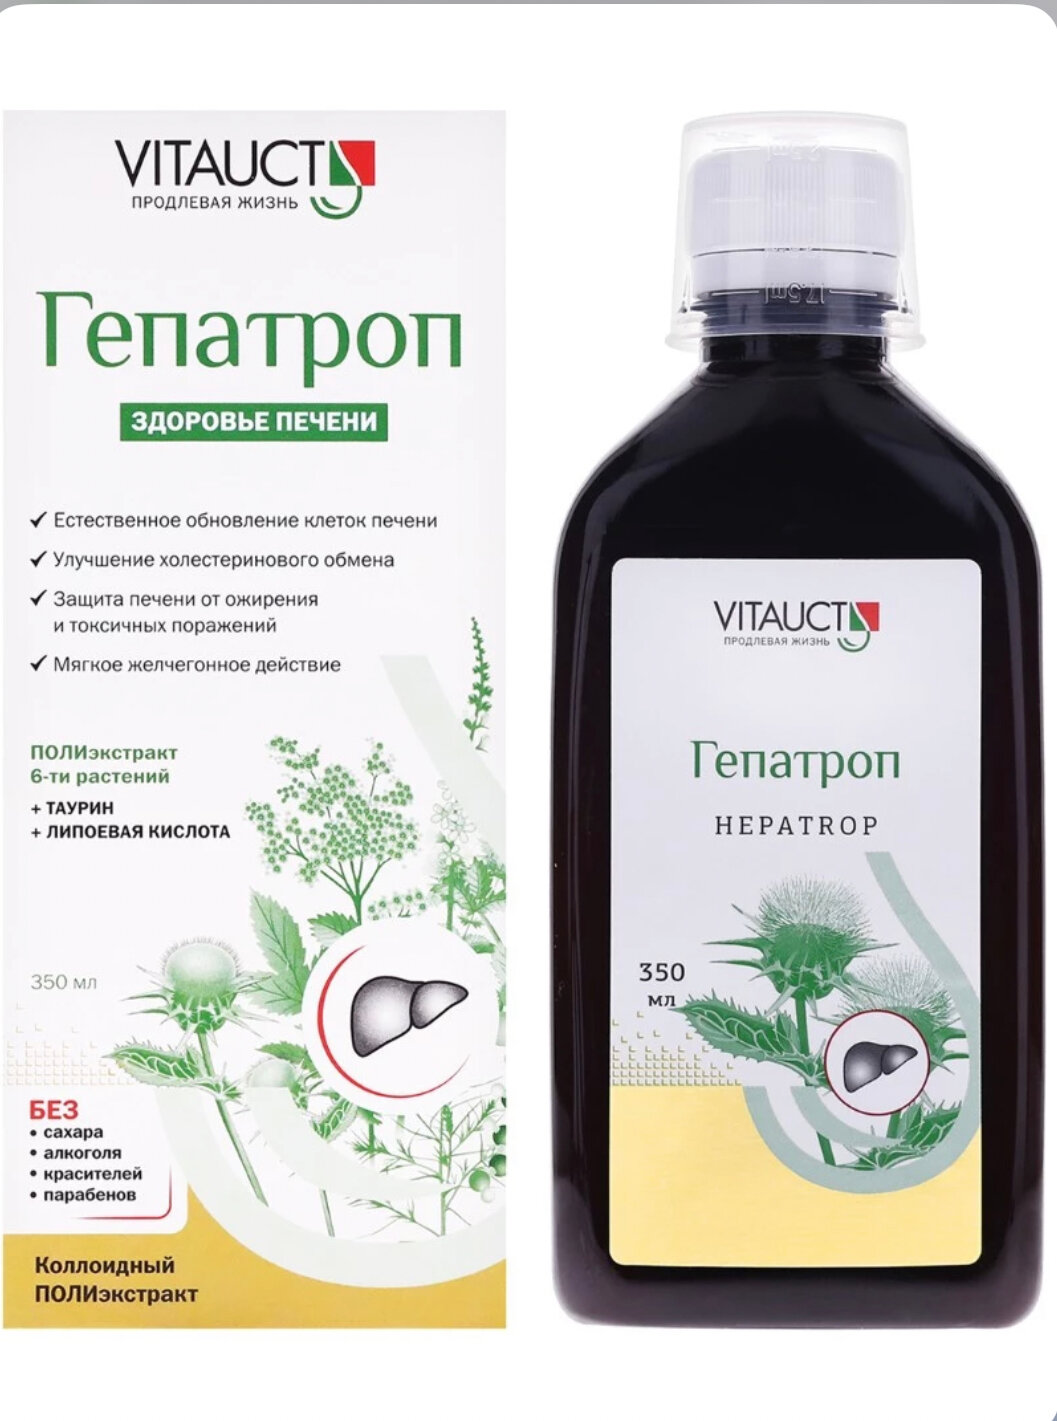 Гепатроп Витаукт (Hepatrop Vitauct), 350 мл